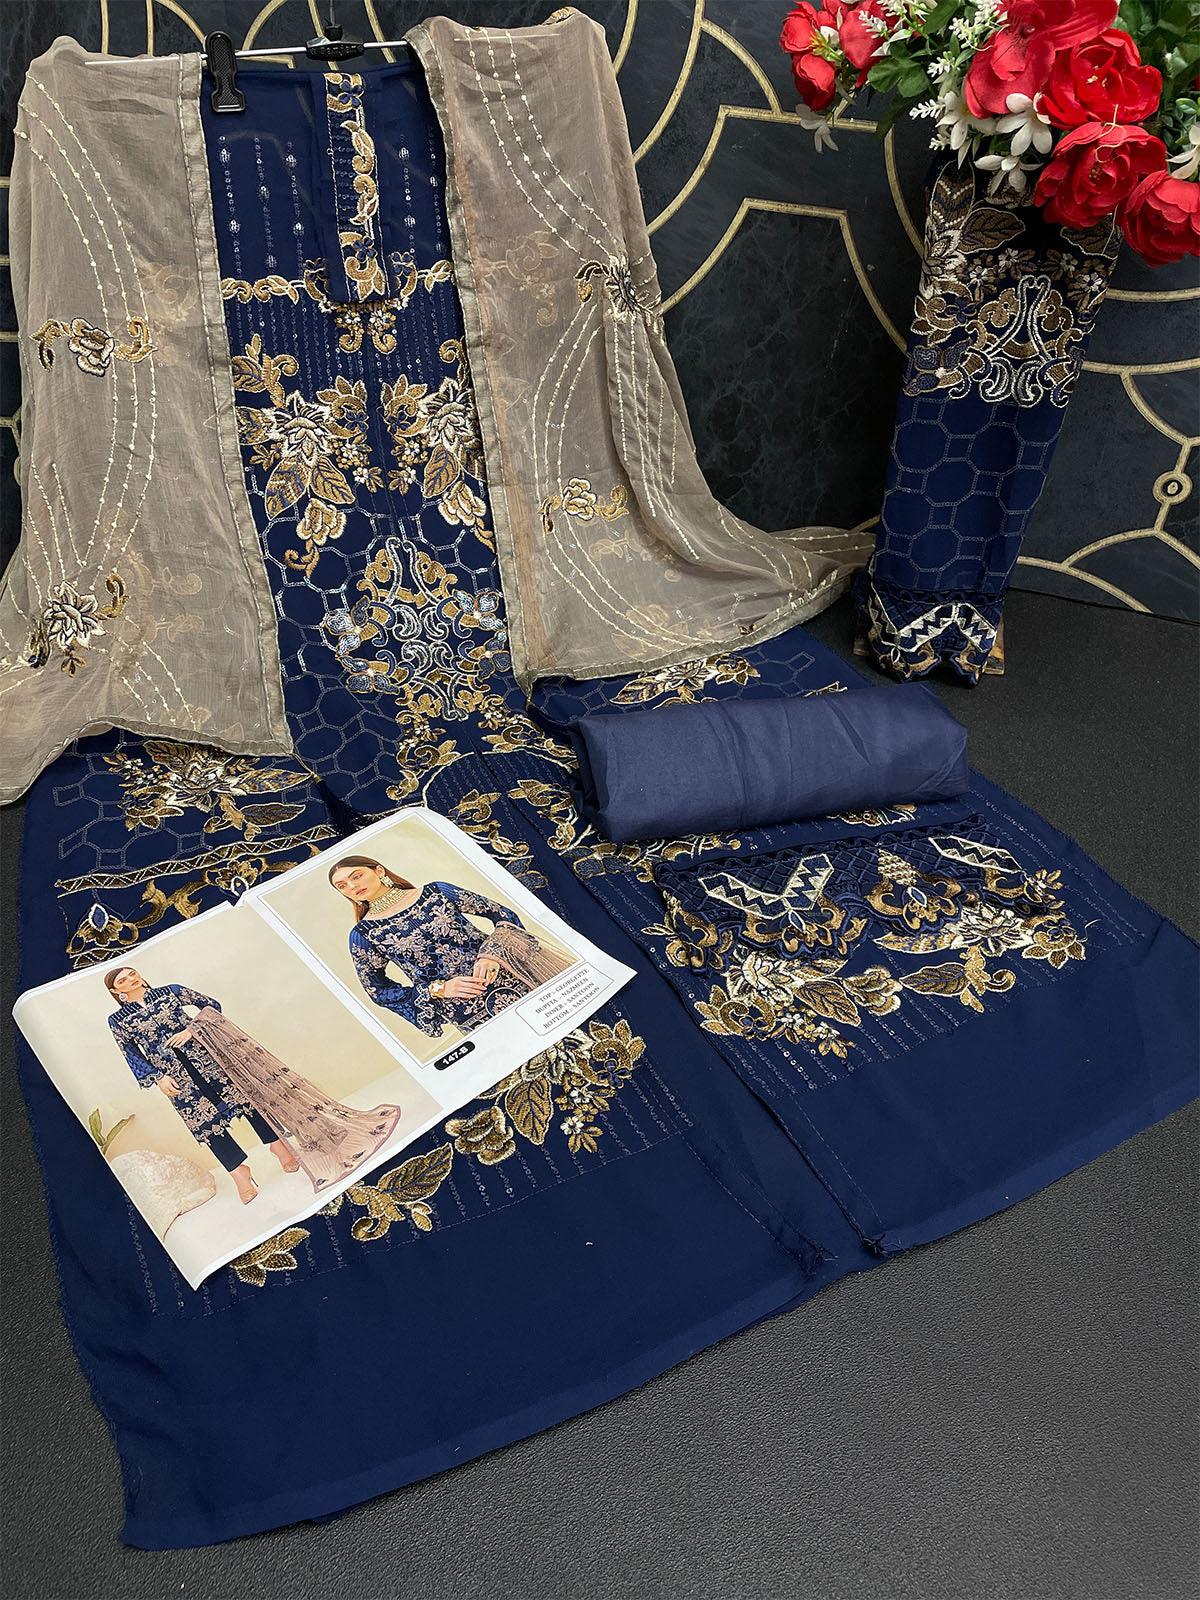 Women's Blue Heavy Embroidered Salwas Suit Set - Odette